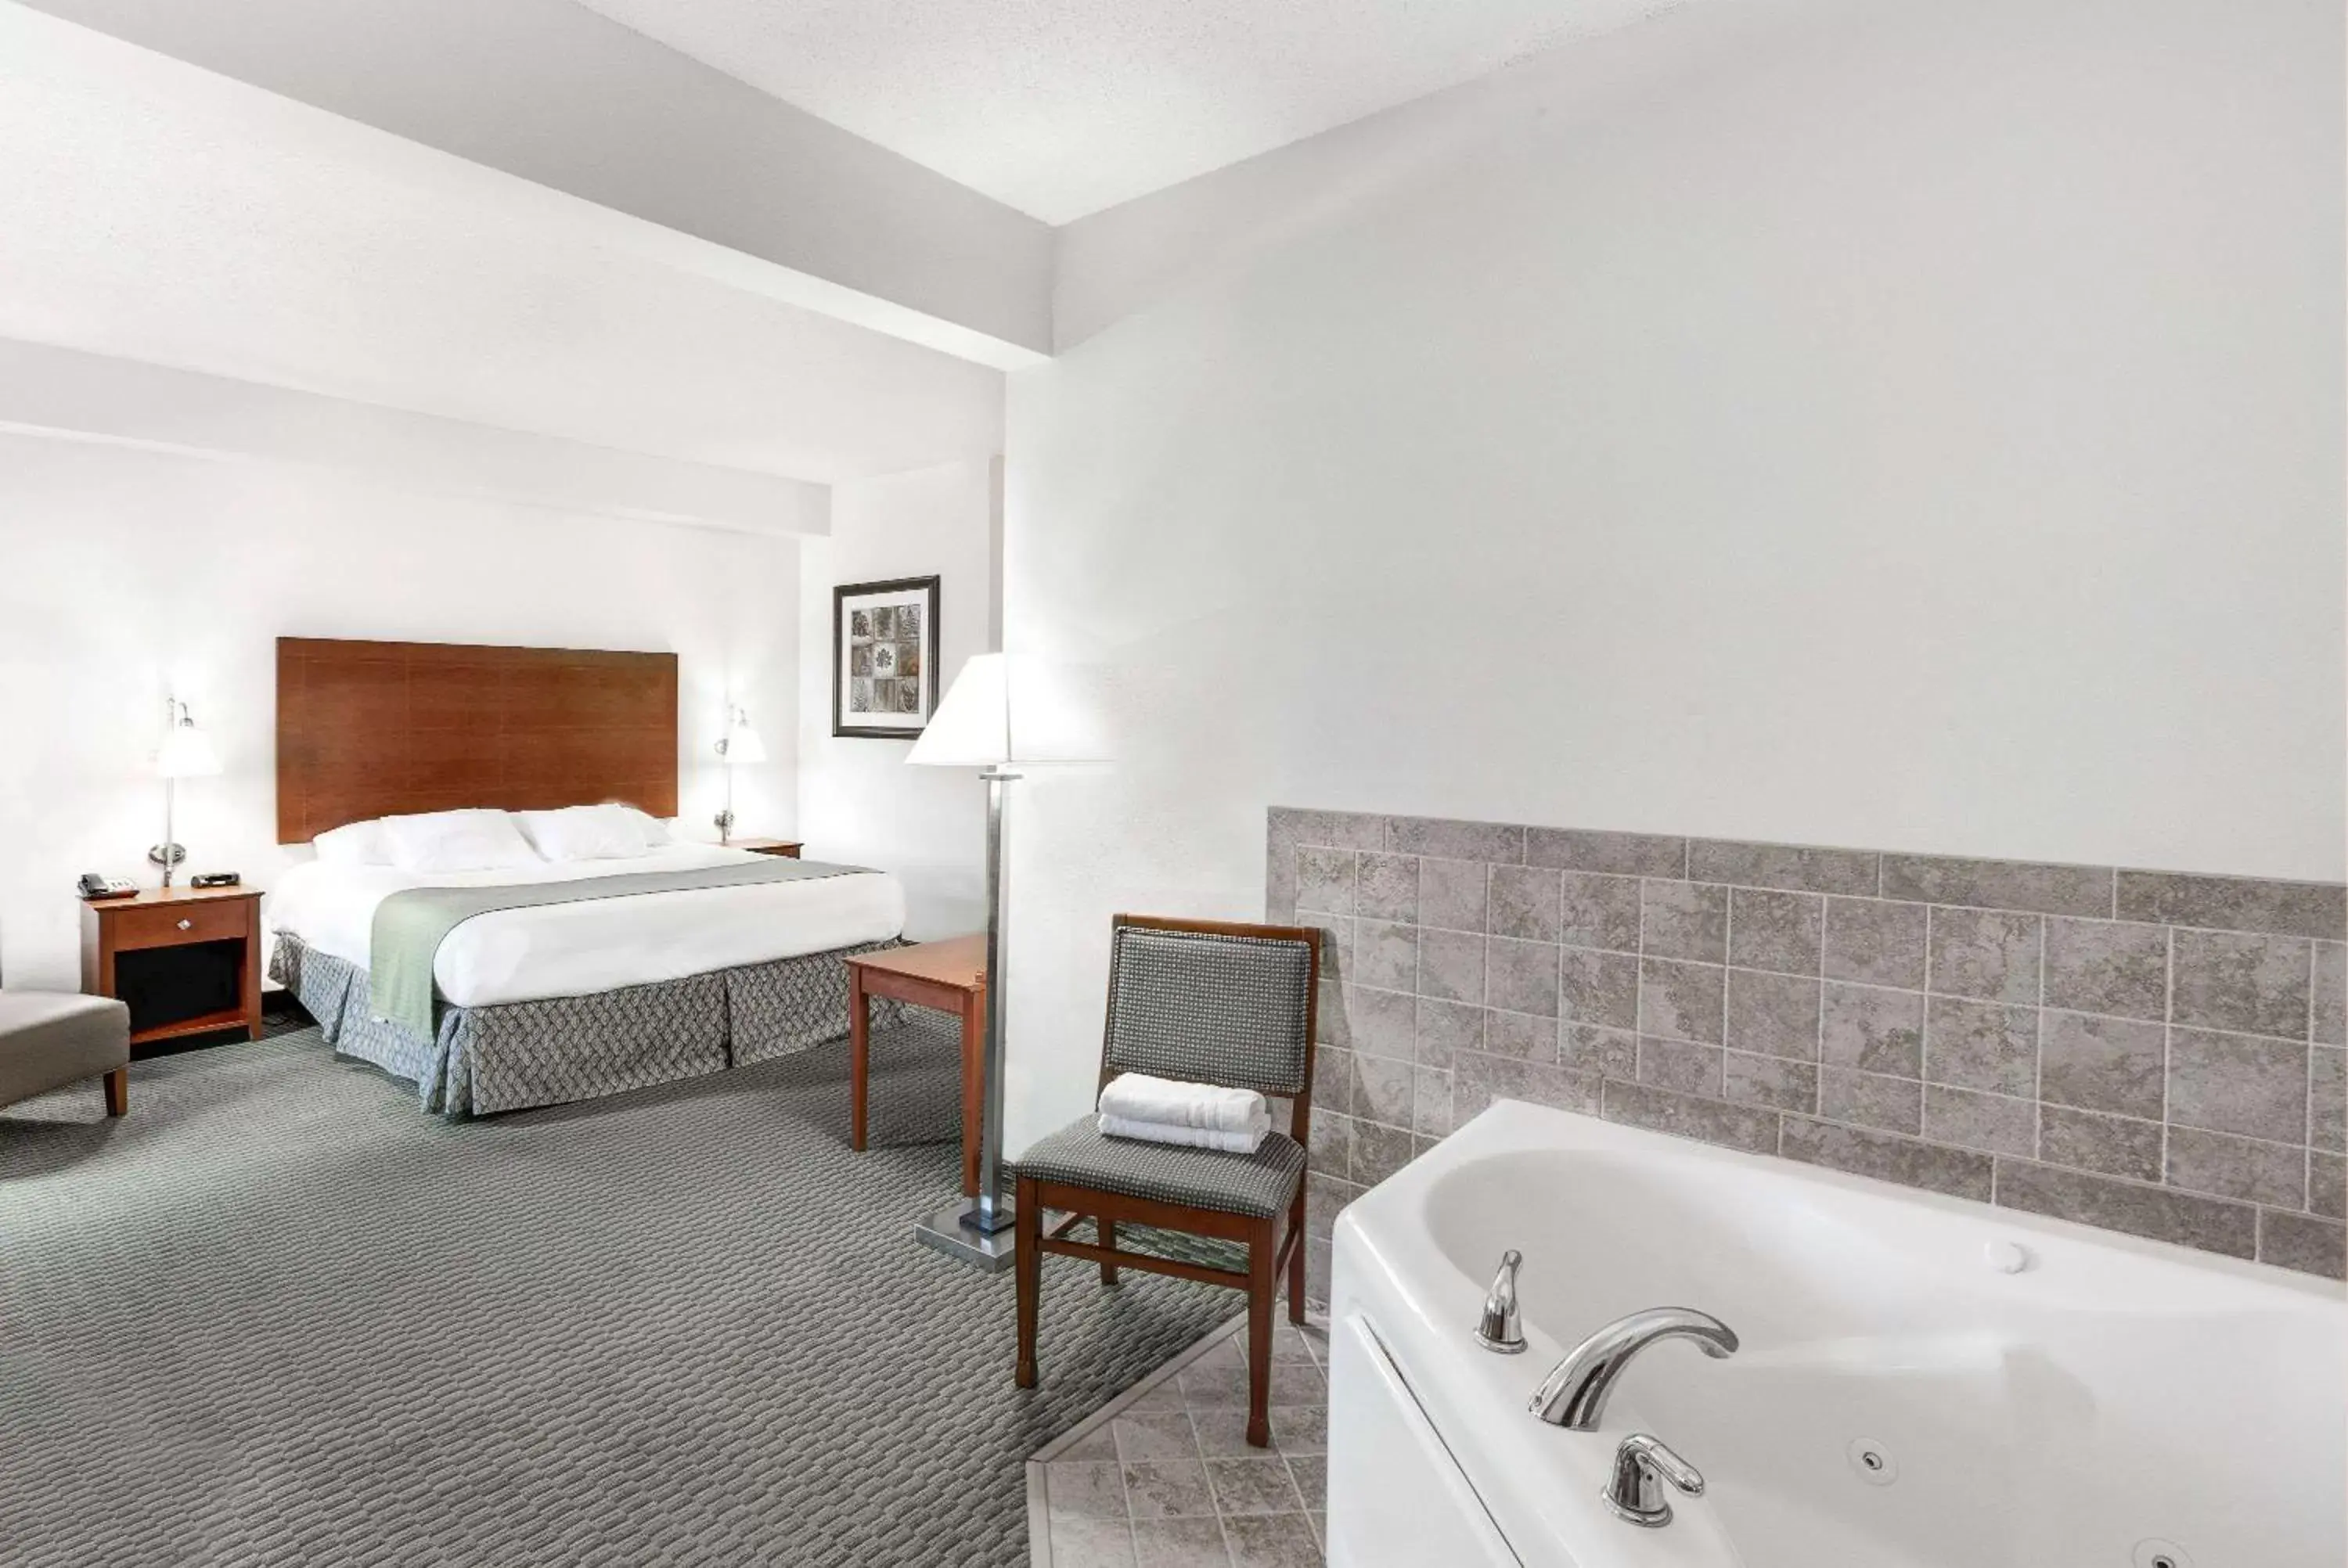 Photo of the whole room, Bathroom in Days Inn by Wyndham Carroll